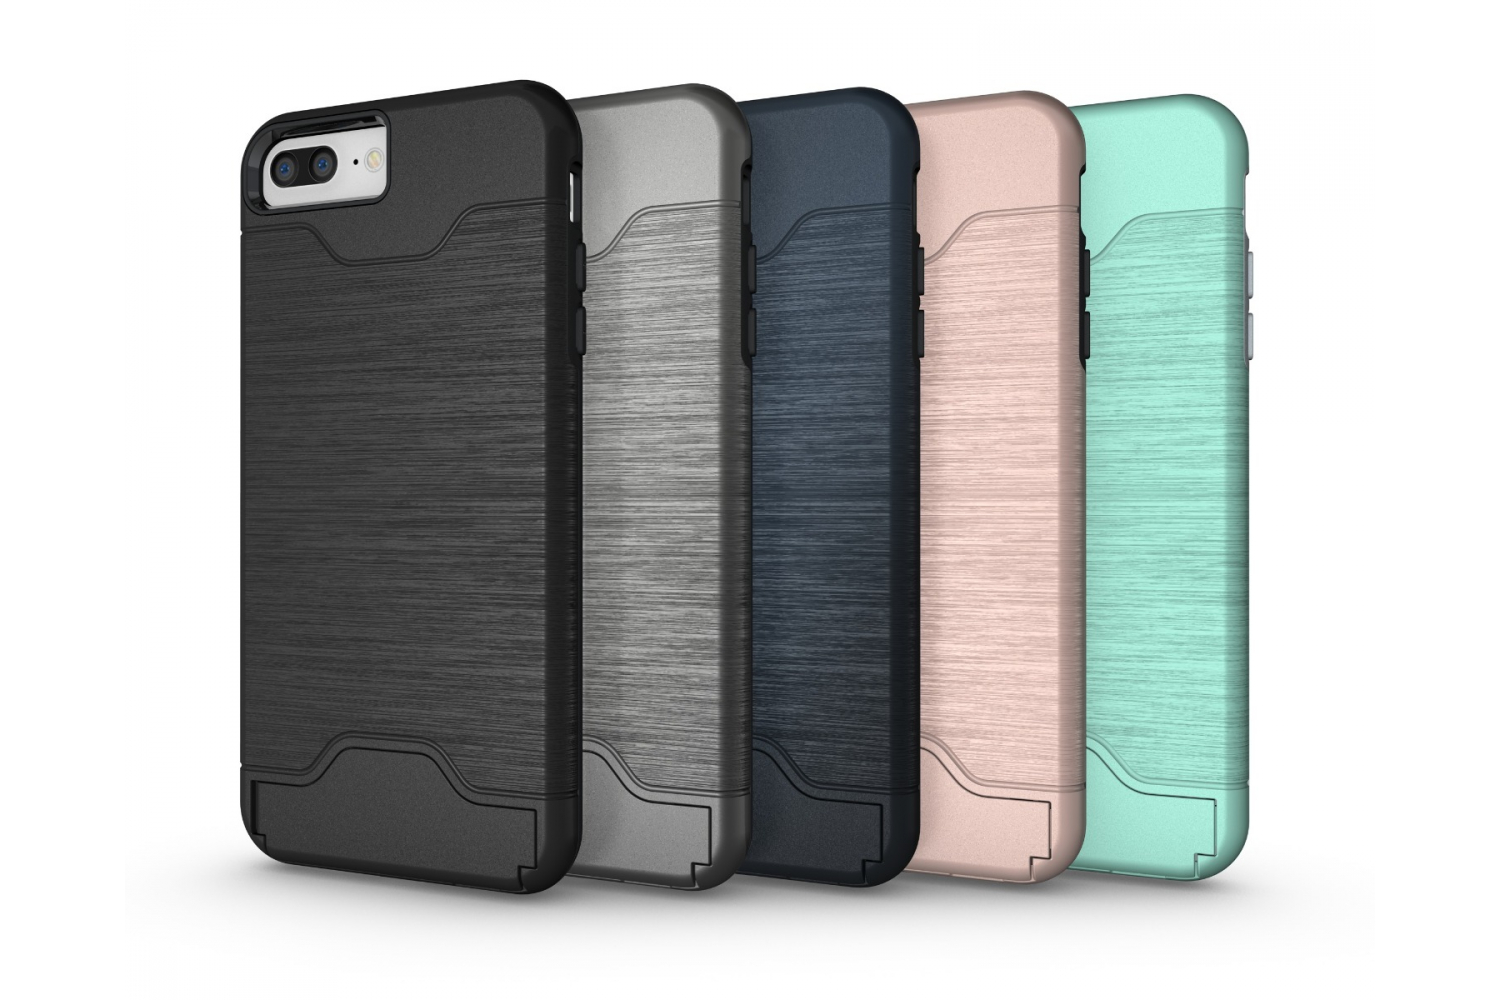 Iphone 8 Plus Back Cover Case Zwart